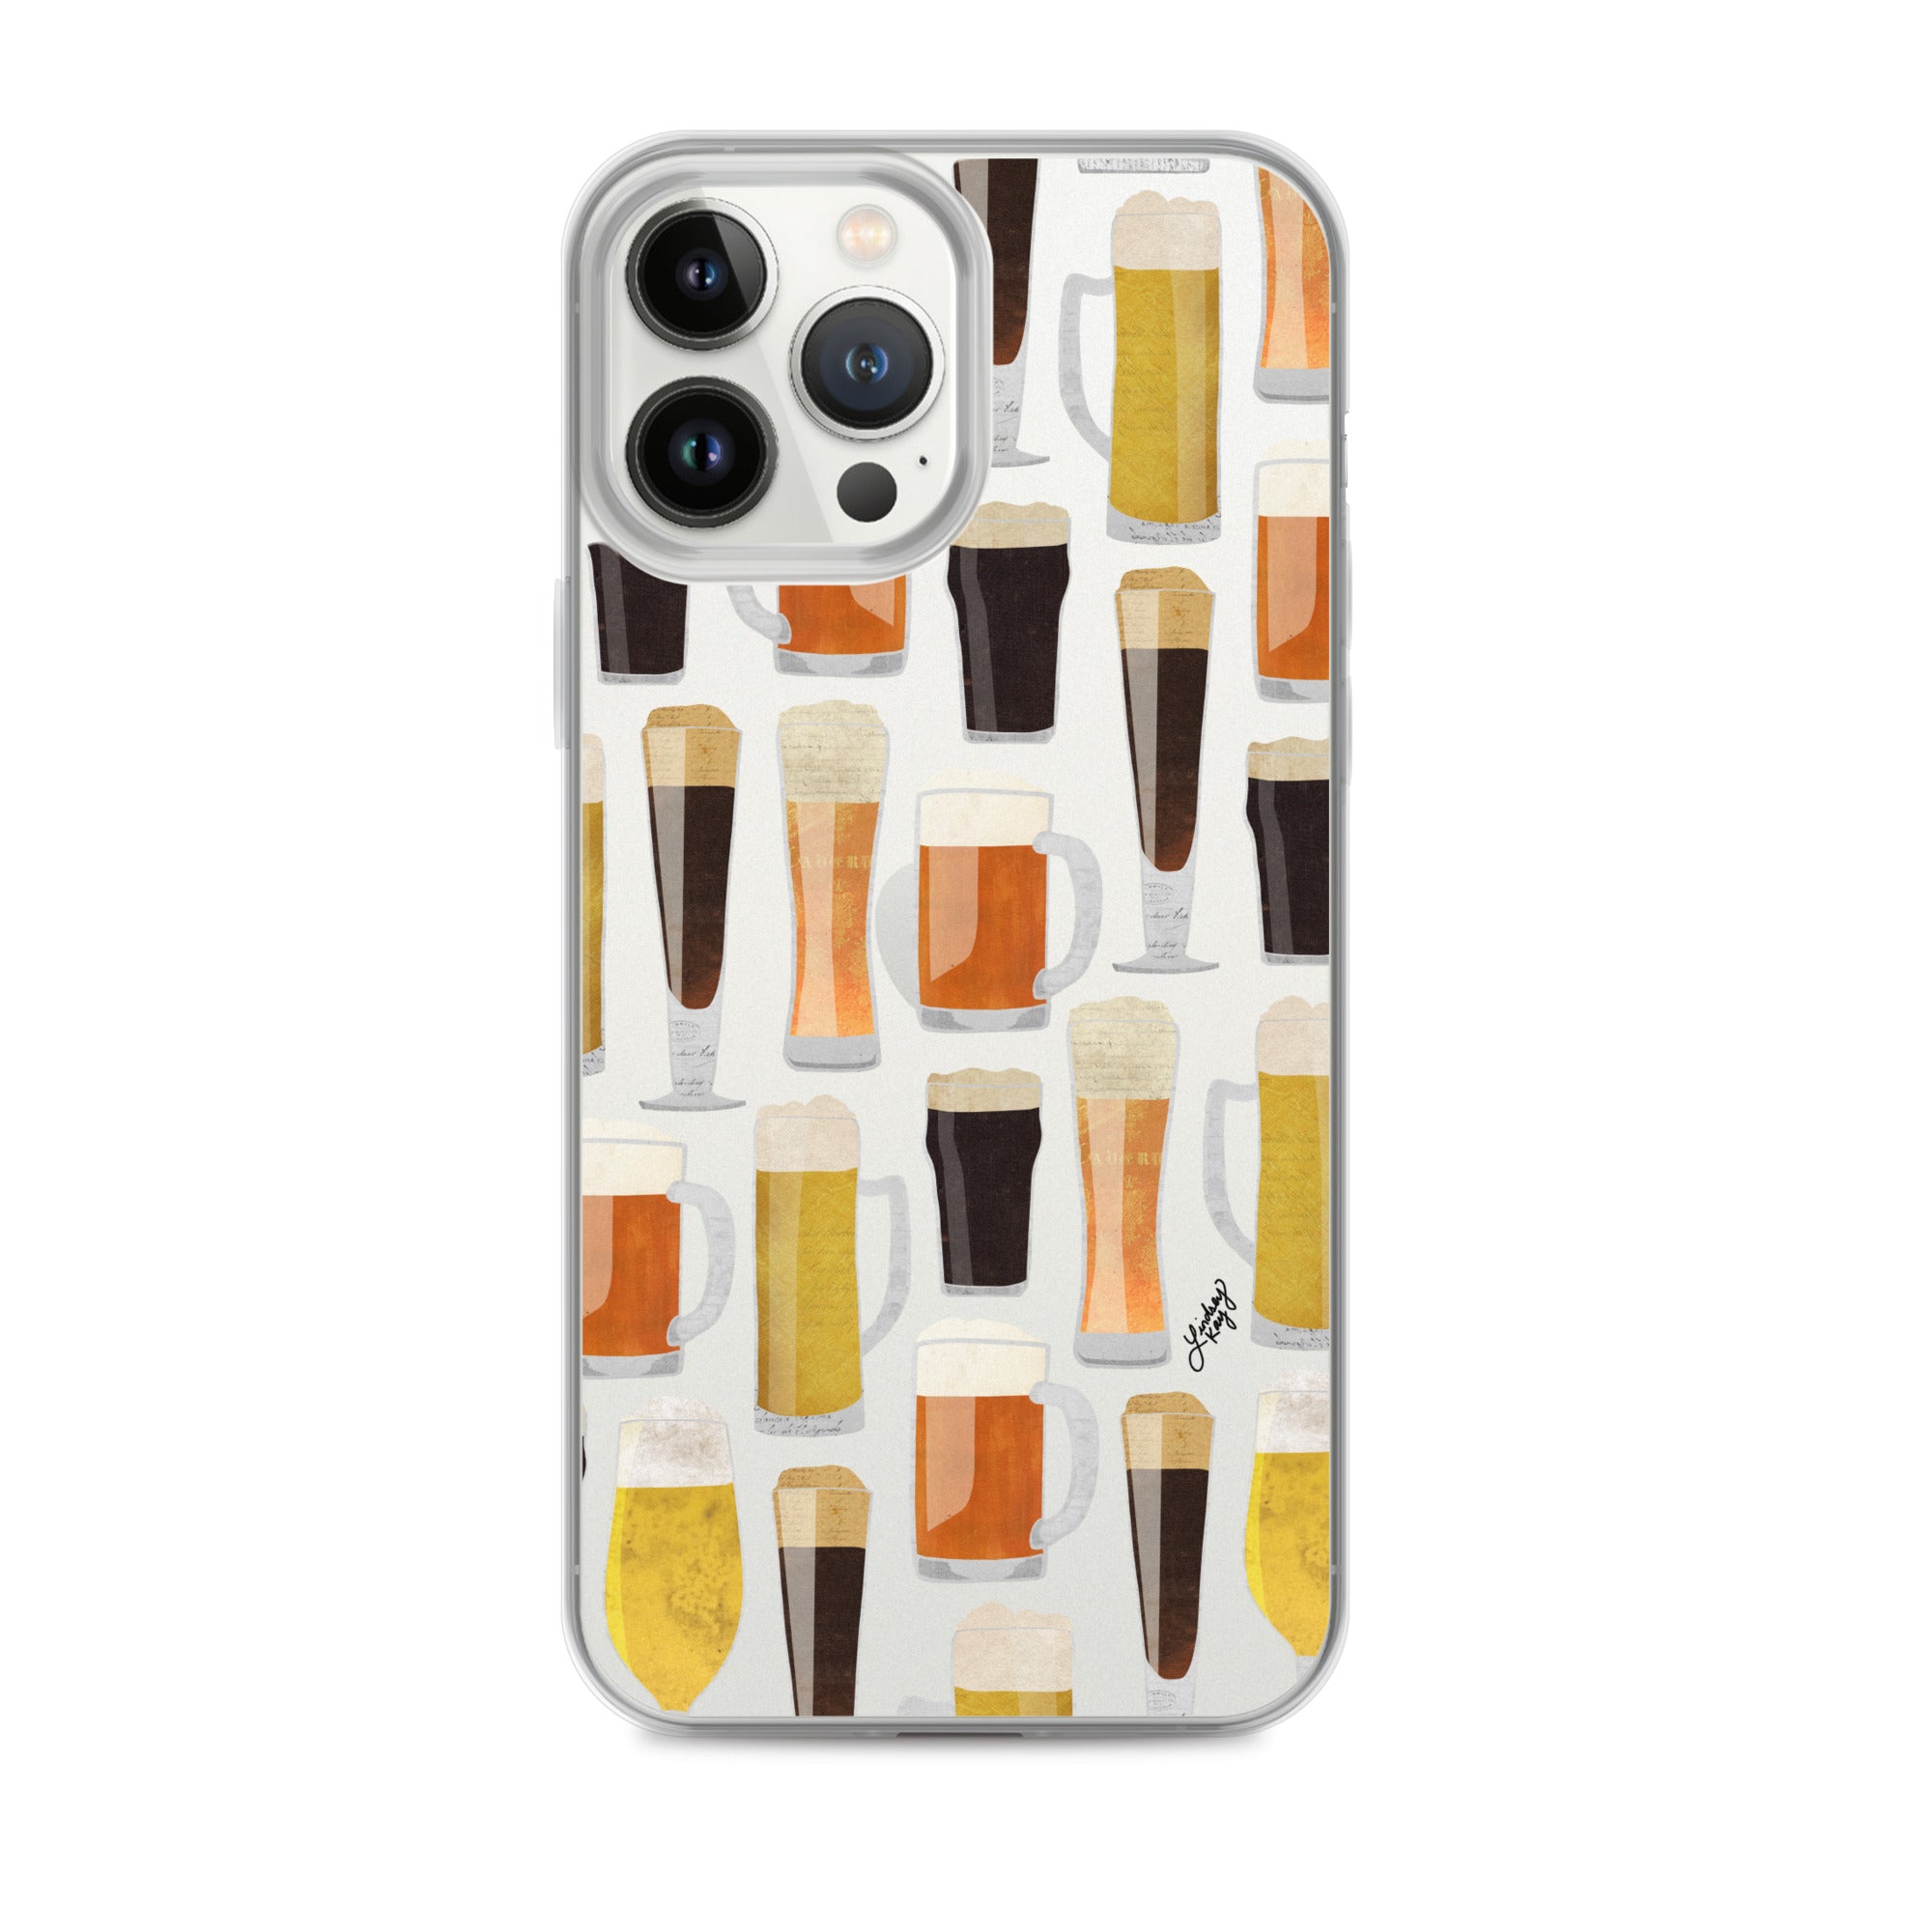 Jarras de cerveza - Funda transparente para iPhone®